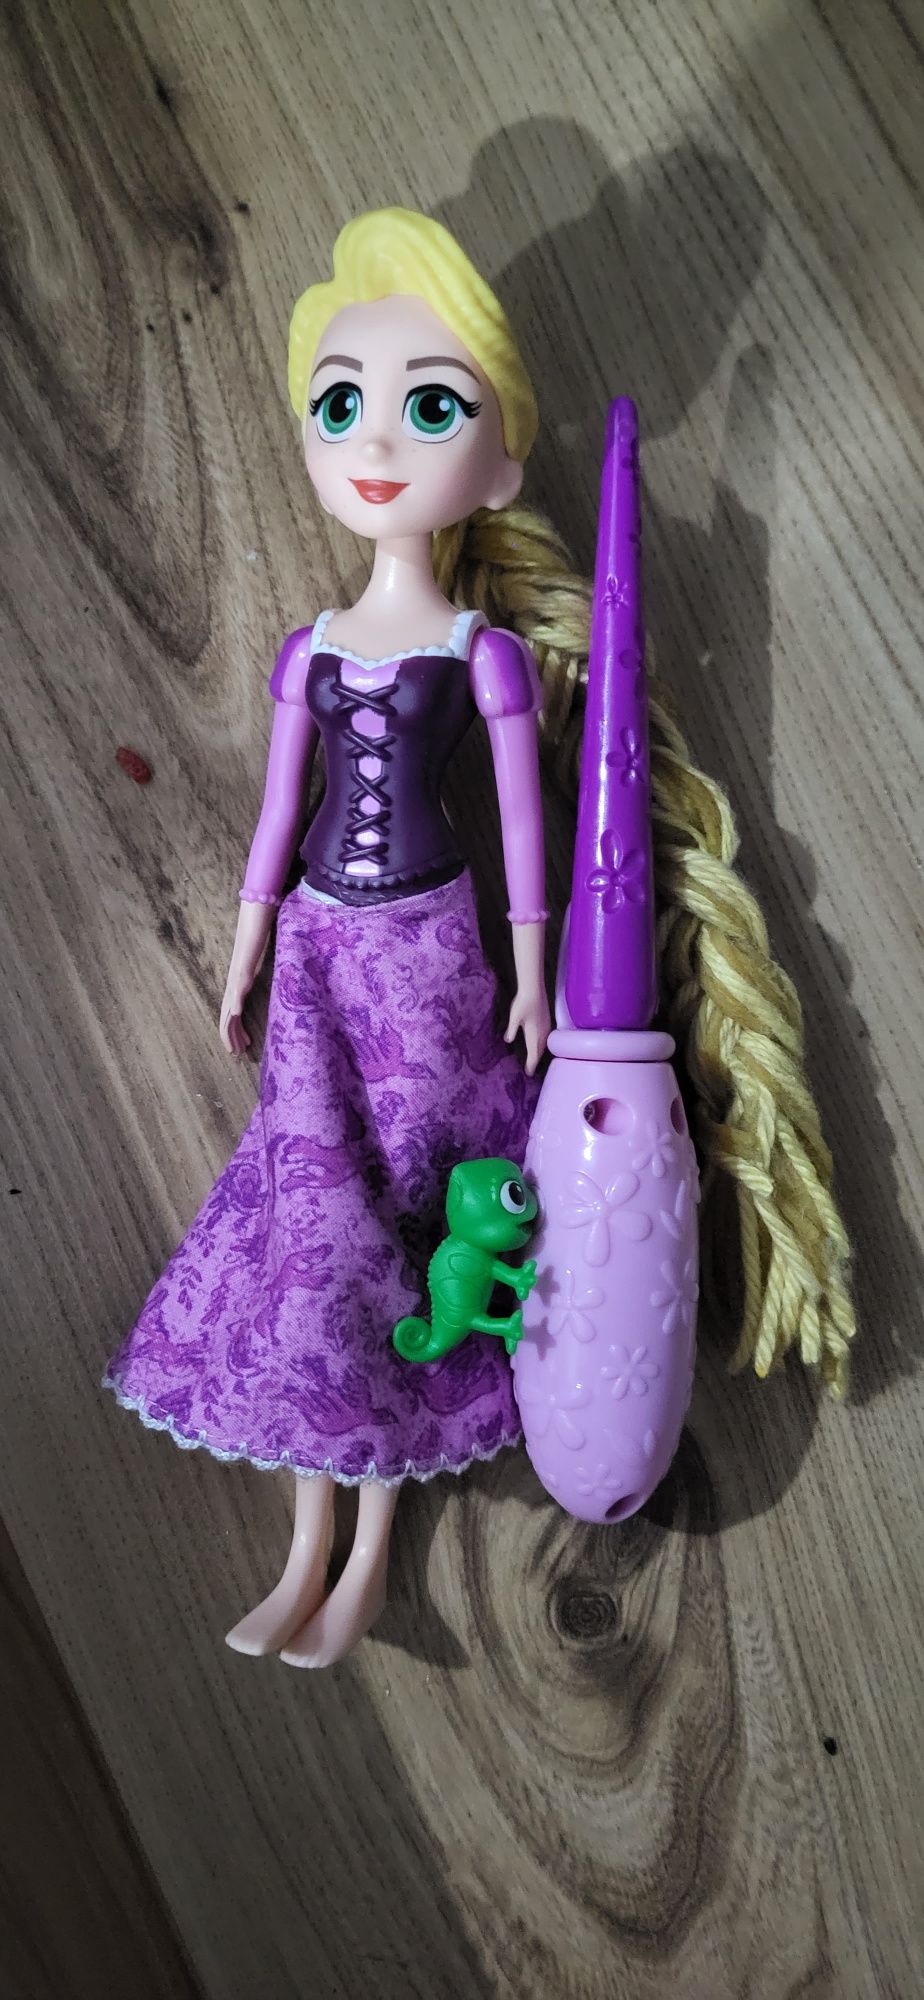 Papusa Rapunzel cu accesorii